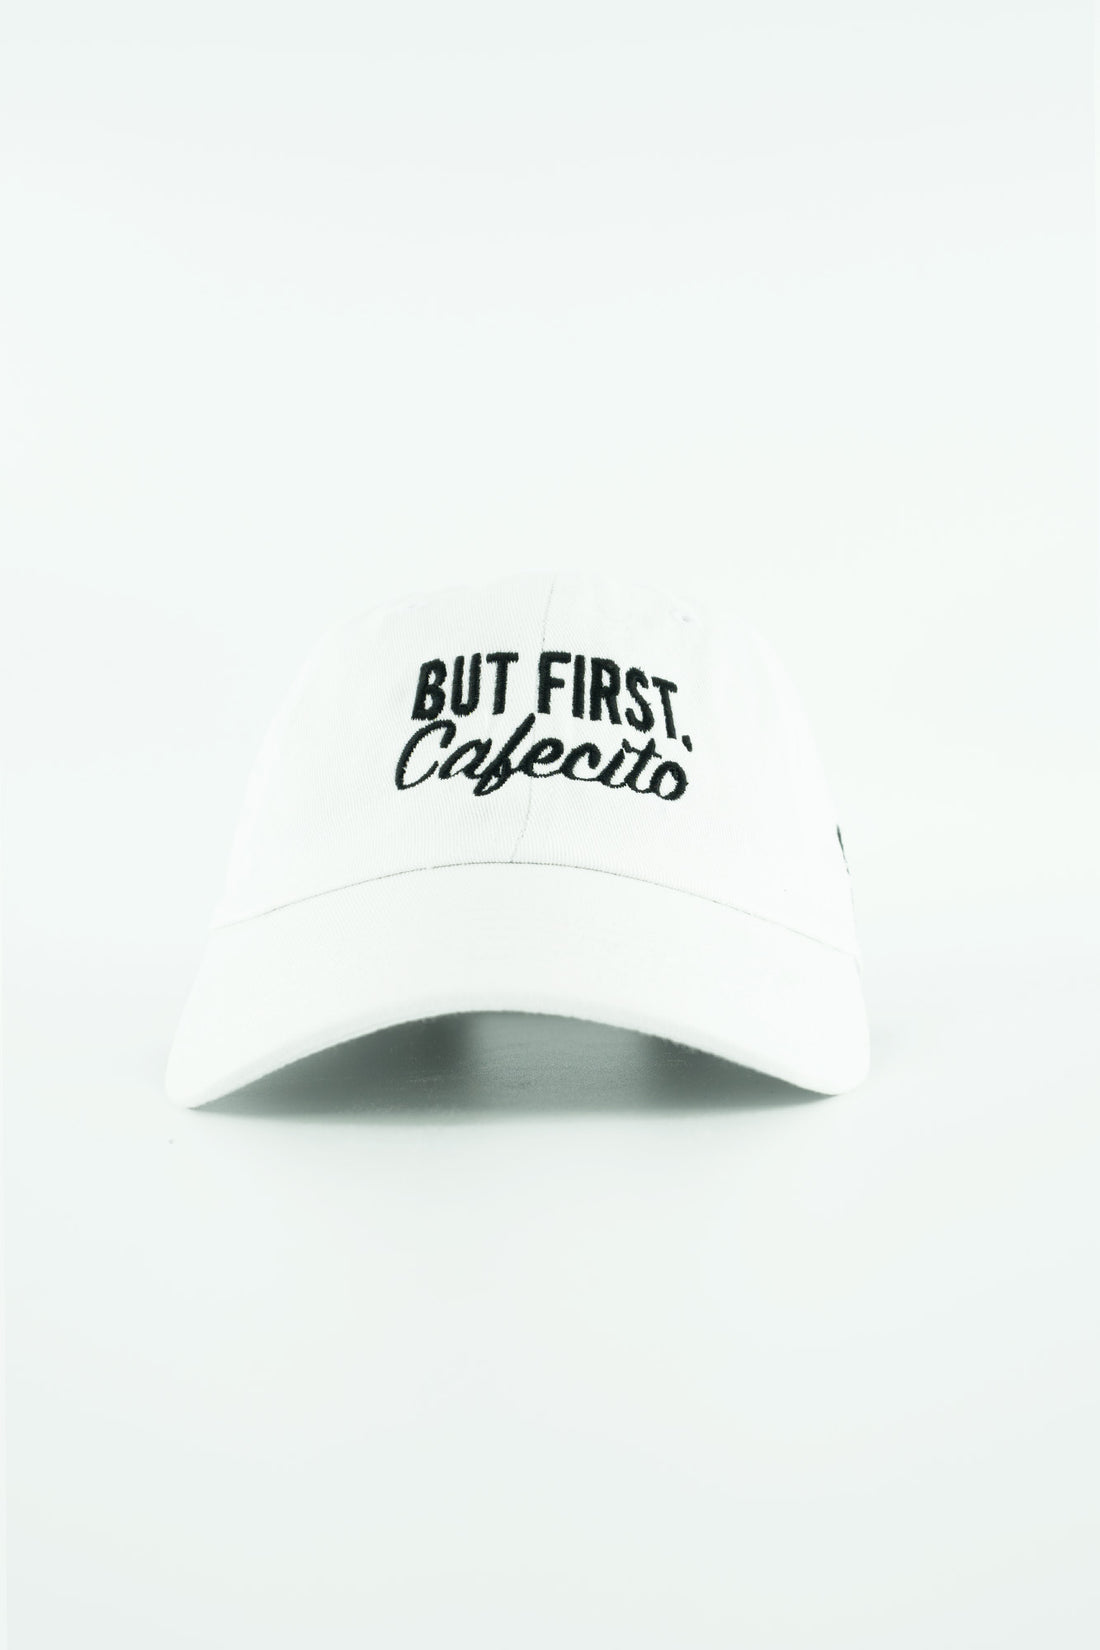 But First, Cafecito Cups - La Tiendecita Edition